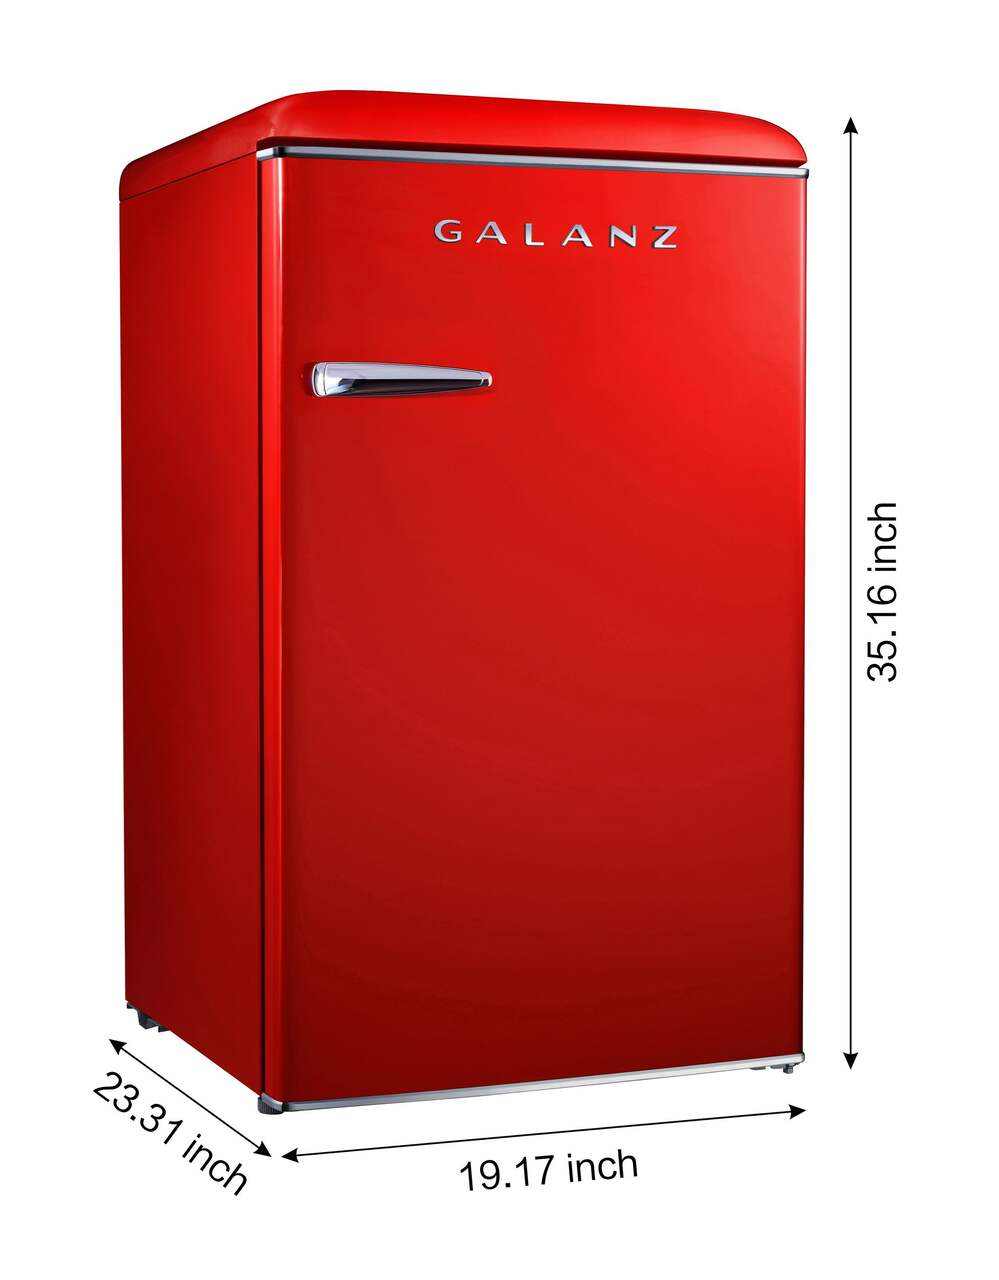 https://media-www.canadiantire.ca/product/living/kitchen/white-goods/3995400/galanz-3-5-cu-ft-mini-retro-fridge-red-2e40b15d-8092-4bde-a745-7cb2b6f27b92-jpgrendition.jpg?imdensity=1&imwidth=1244&impolicy=mZoom